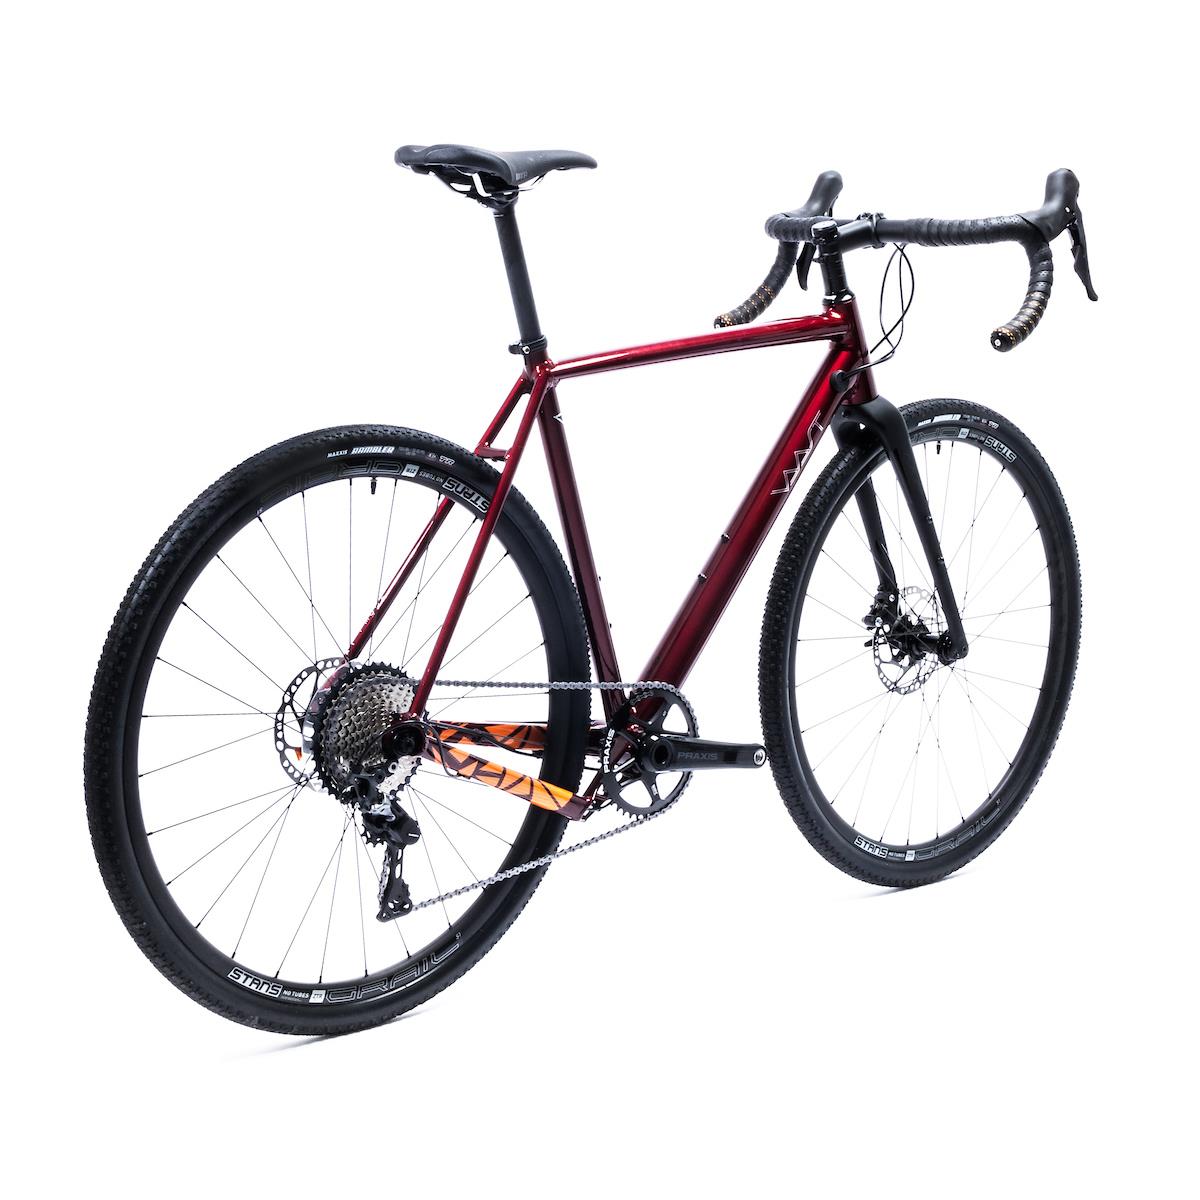 Vaast A/1 700C GRX L dviratis, 56 cm, raudona